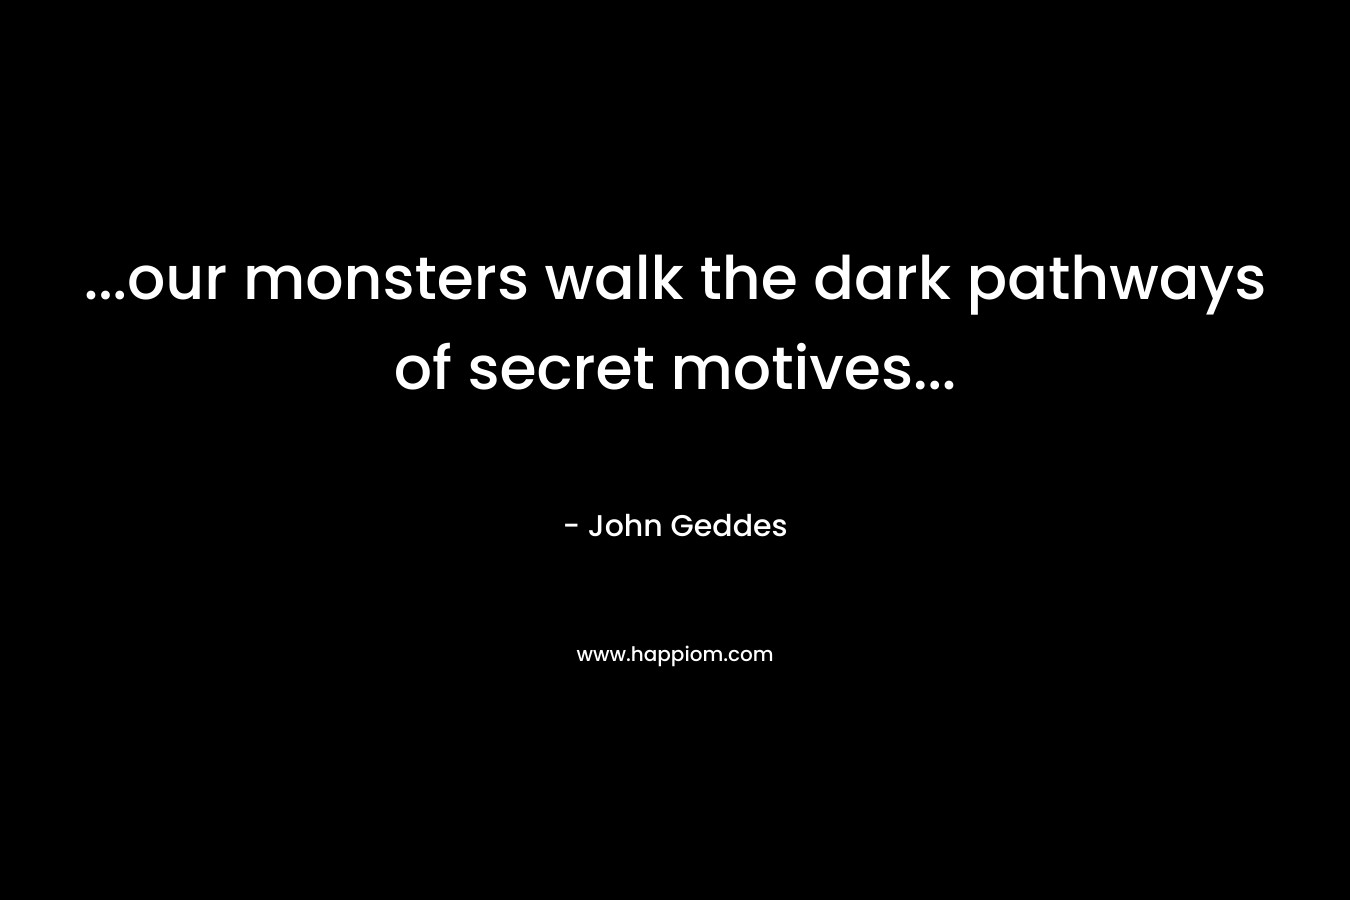 ...our monsters walk the dark pathways of secret motives...